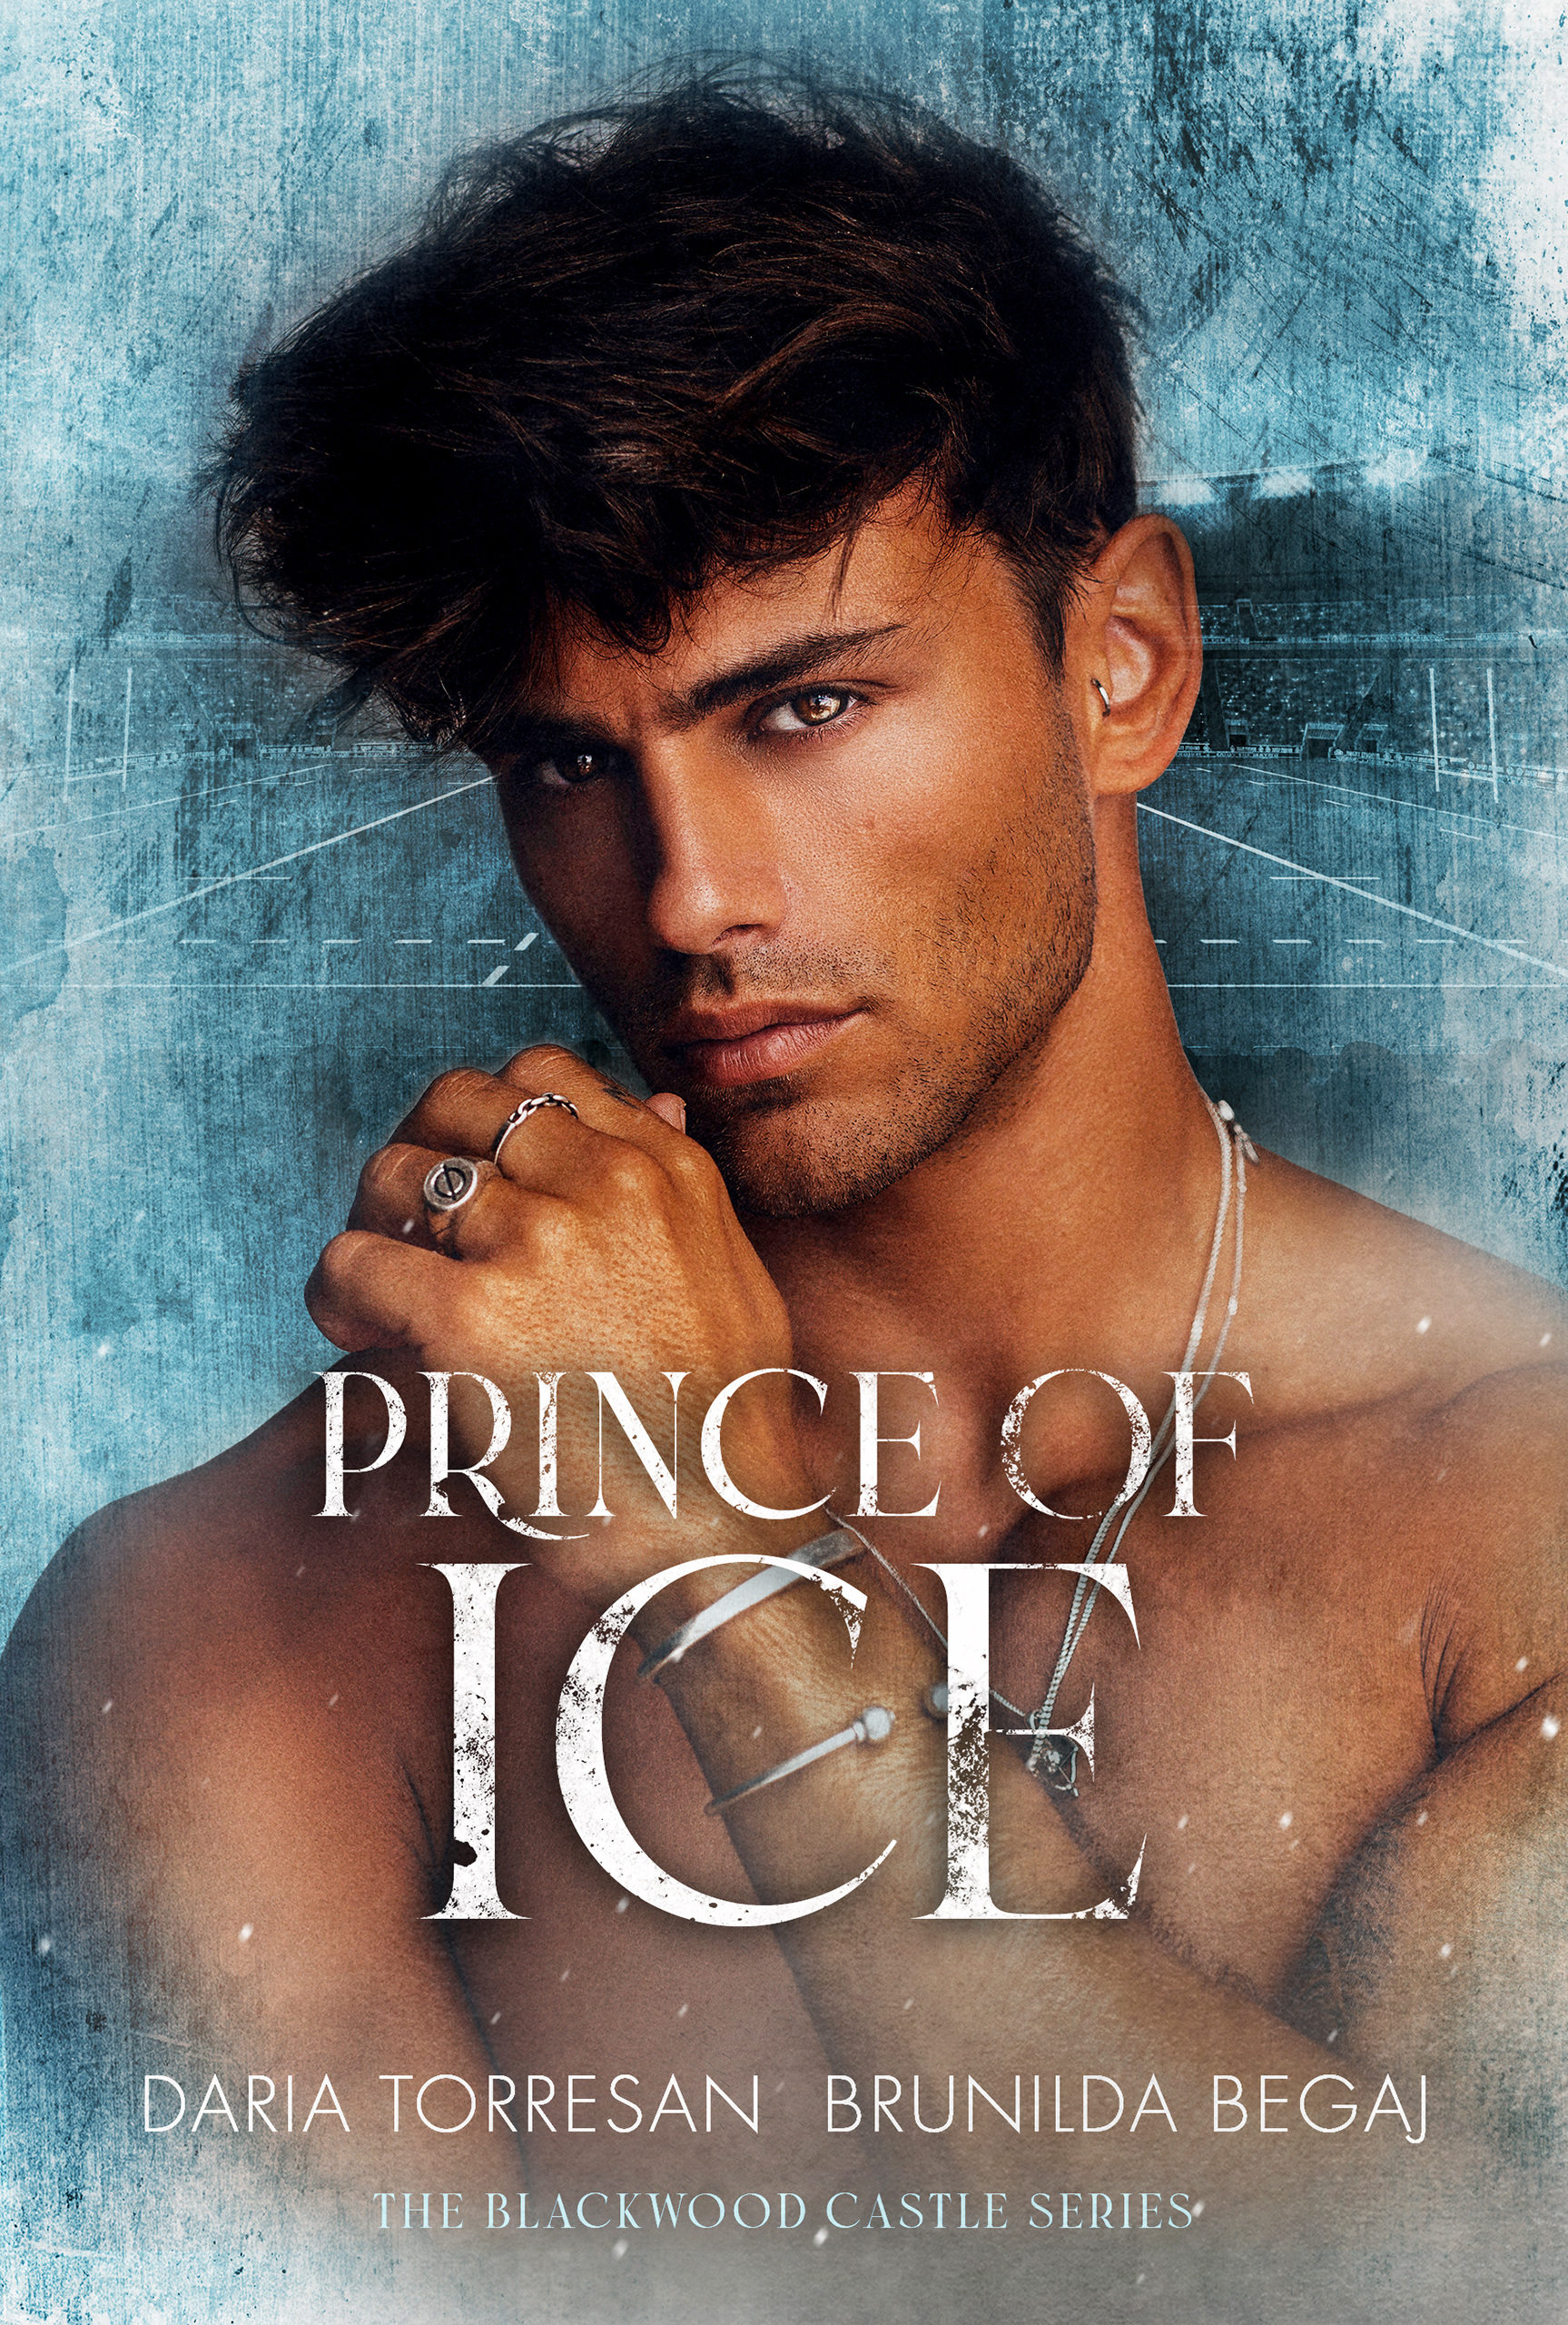 Segnalazione di uscita “Prince of ice – The Blackwood Castle Series (vol. 2)” di Daria Torresan e Brunilda Begaj